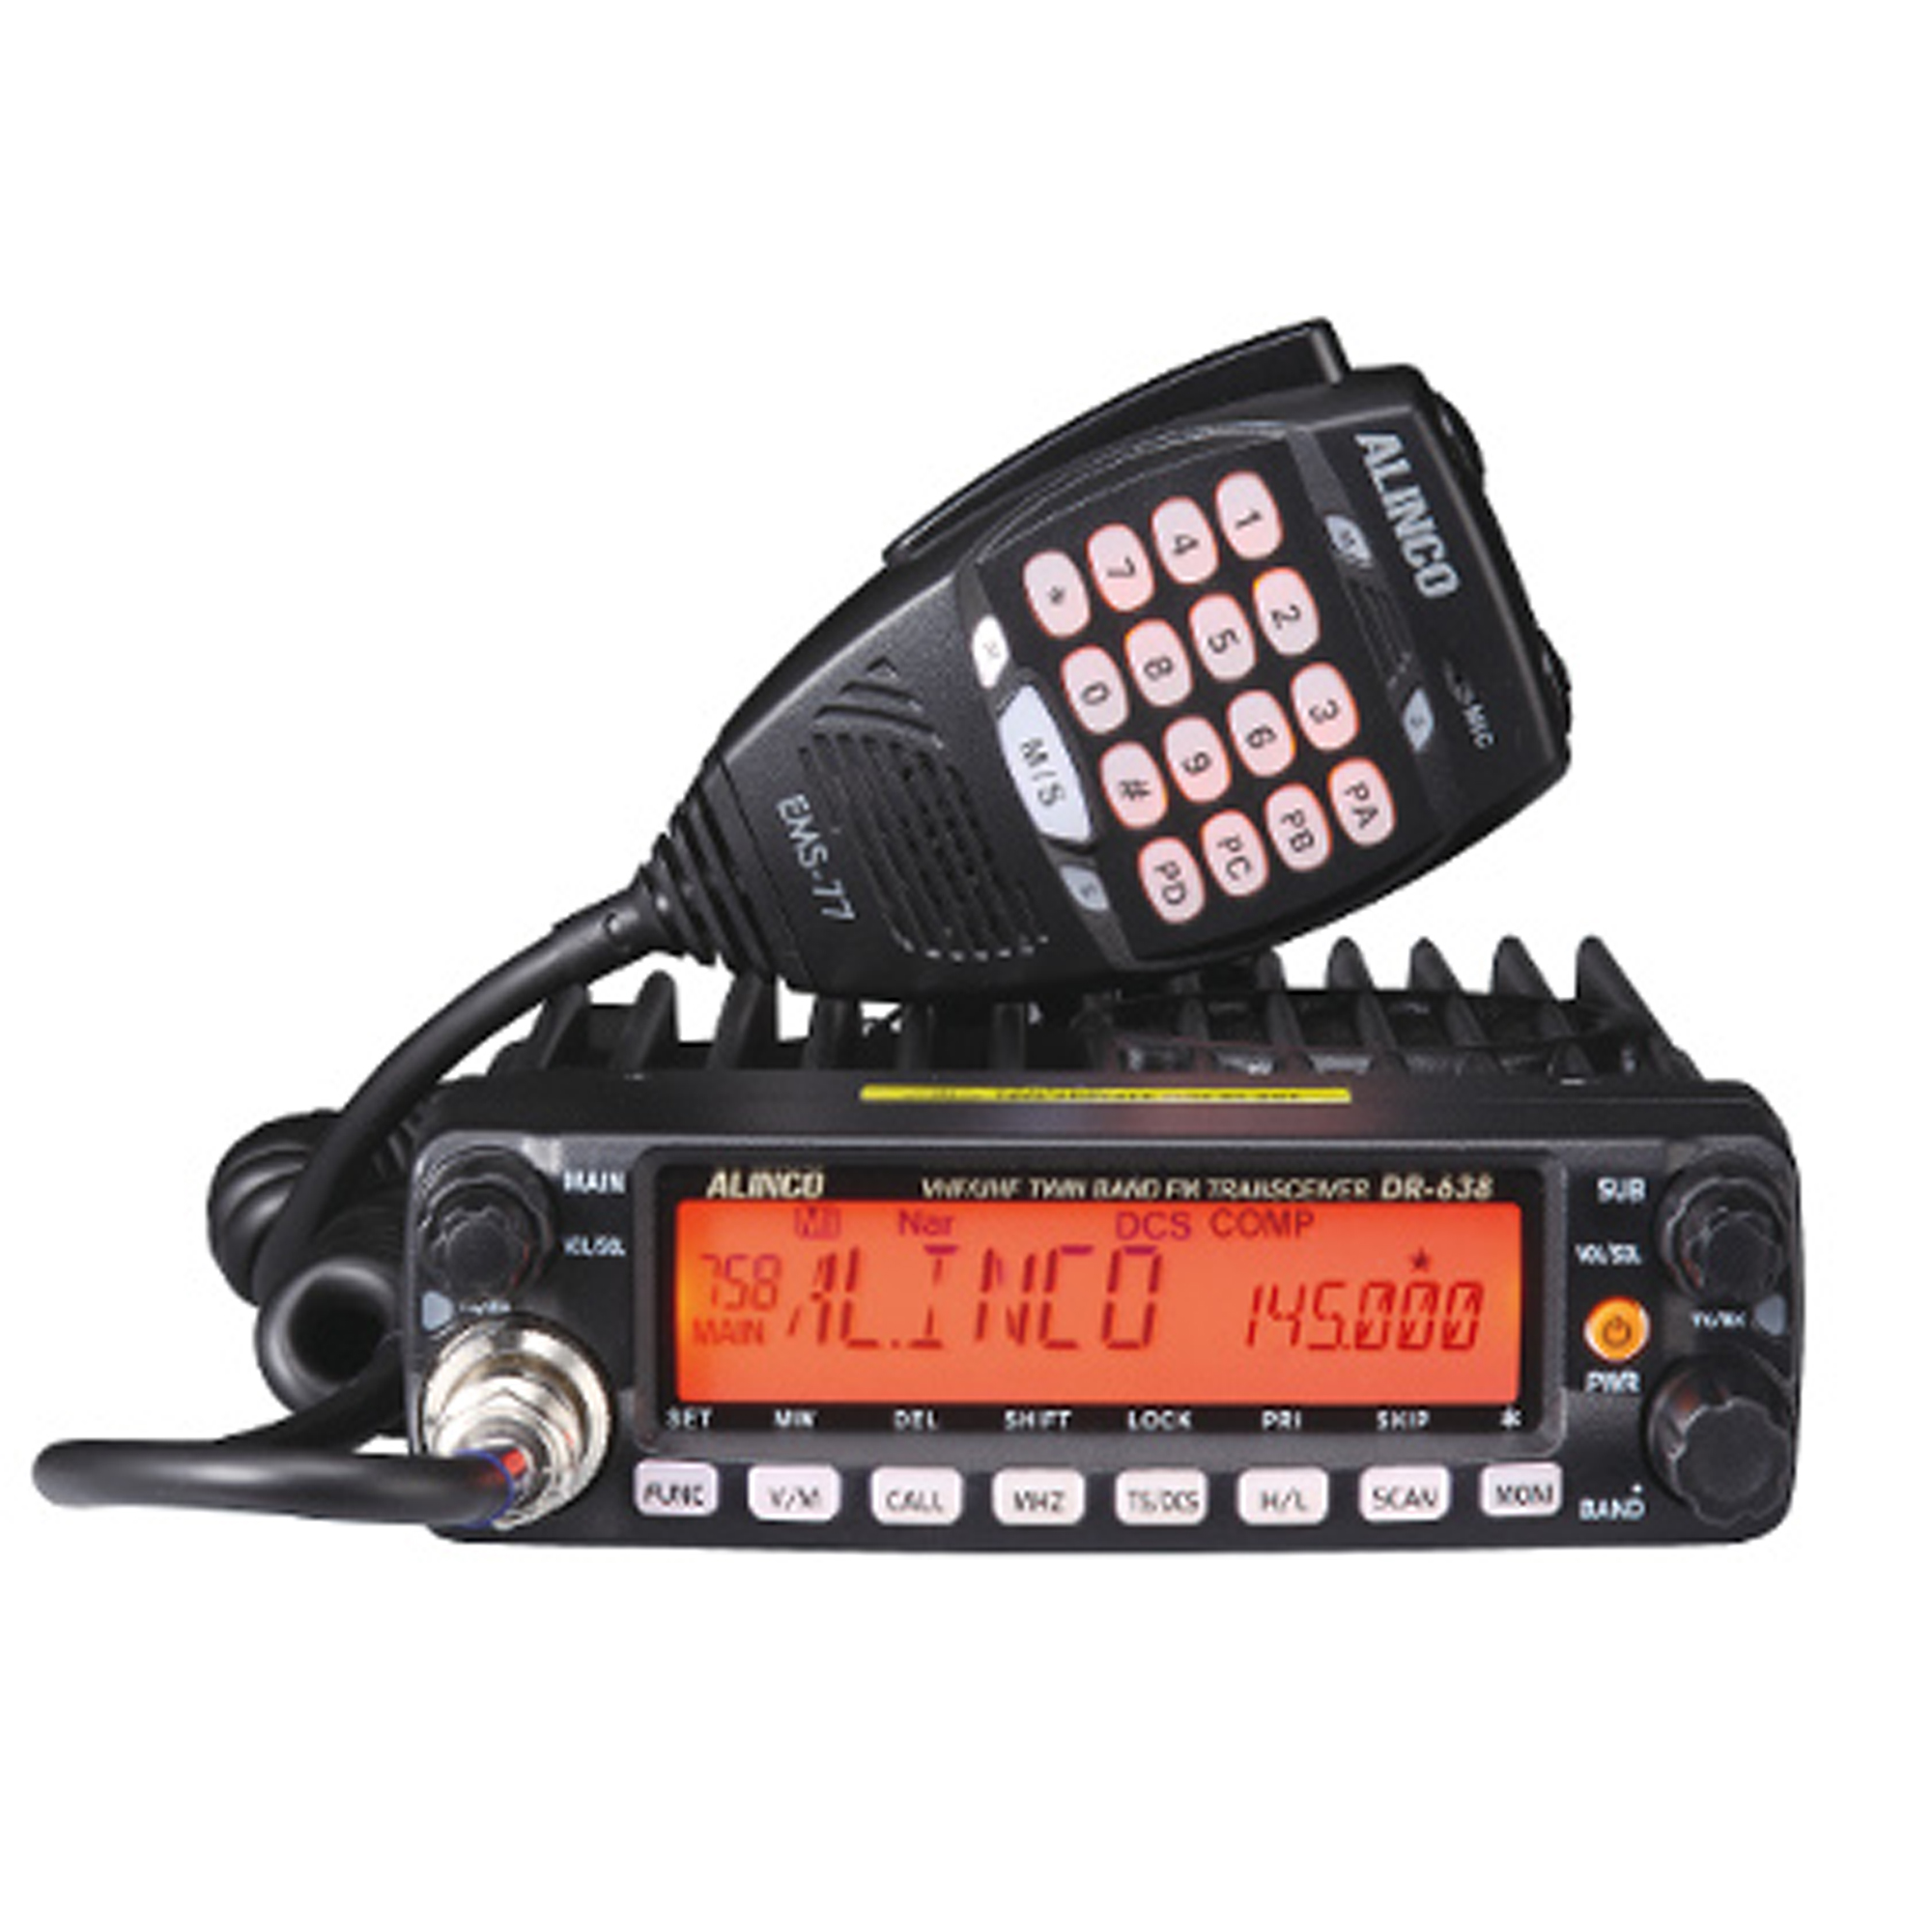 Statie radio VHF/UHF PNI Alinco DR-638HE dual band 144-146MHz/430-440Mhz pentru radioamatori image13